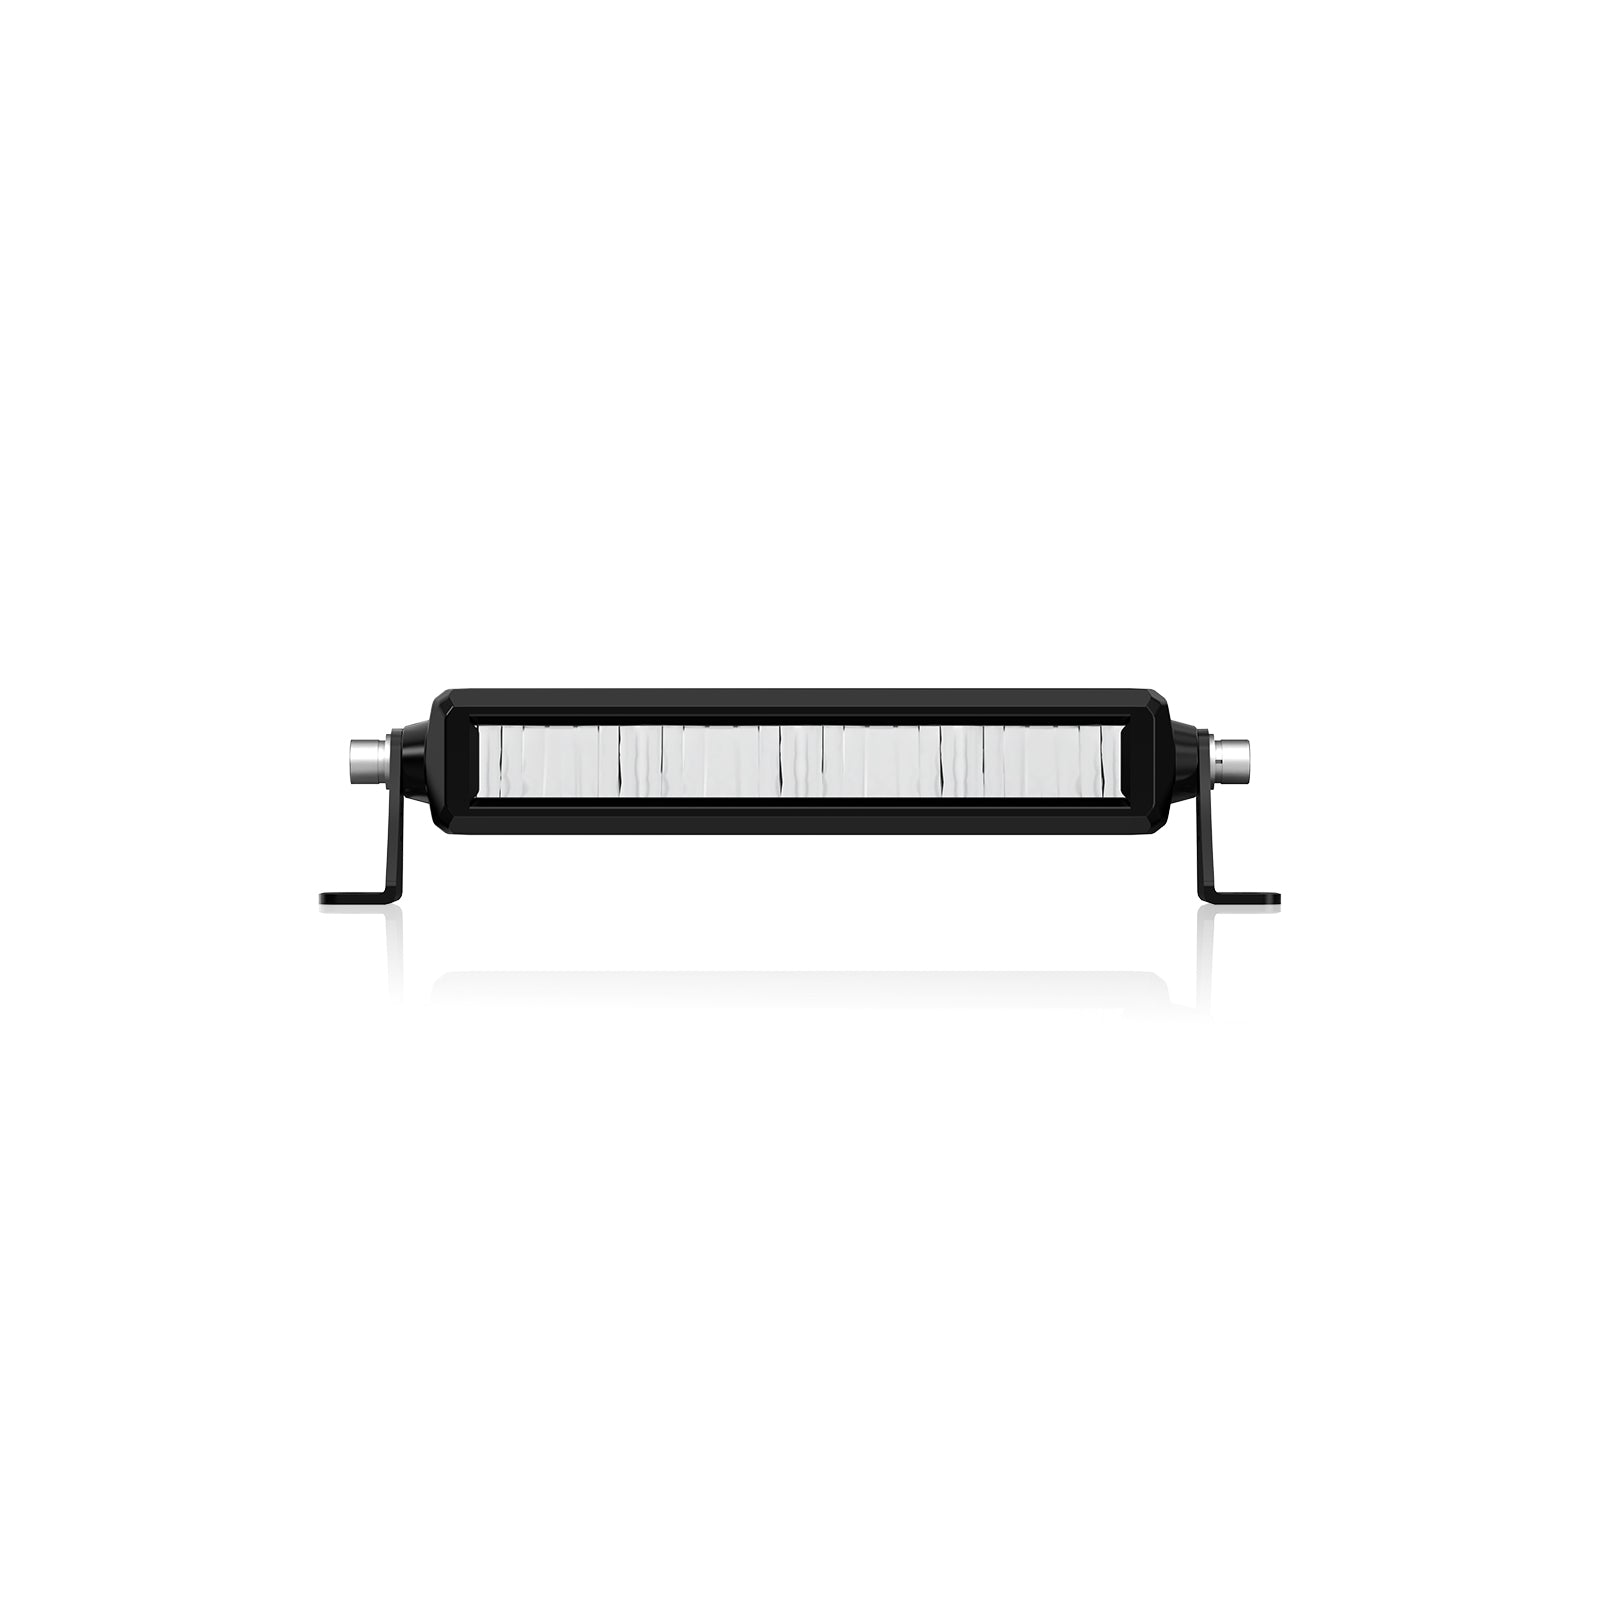 Off Road LED Light Bar 10 20 30 40 50 Inch Single Row Dual Beam White Amber - NOVSIGHT